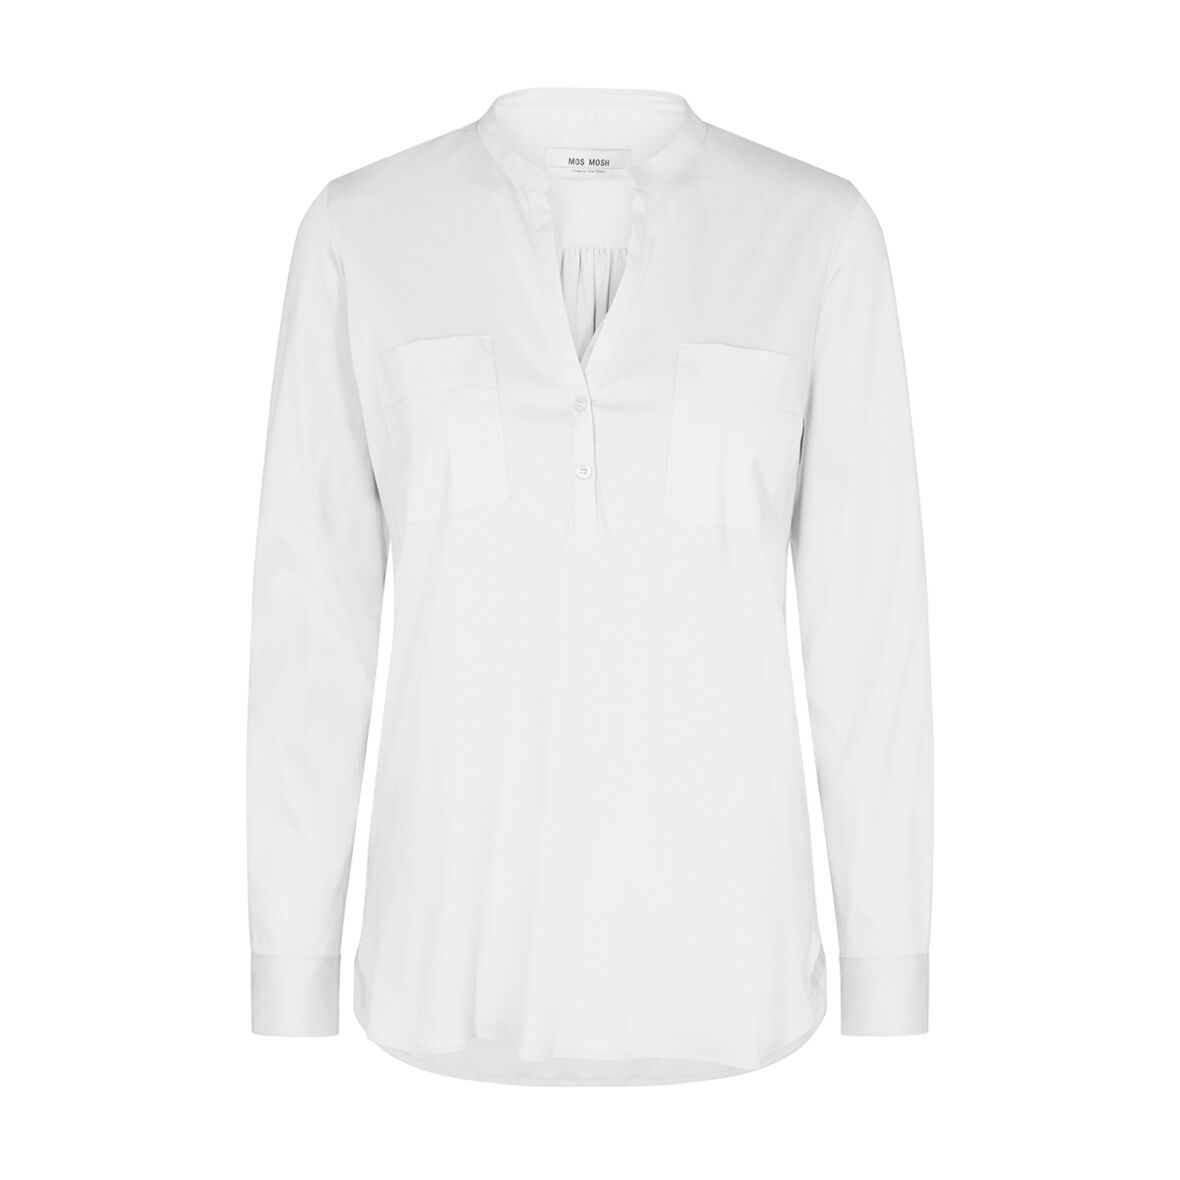 Forretningsmand Frank Worthley Snazzy MOS MOSH - Jovie Jersey Bluse White 143290 - Jydpotten.dk